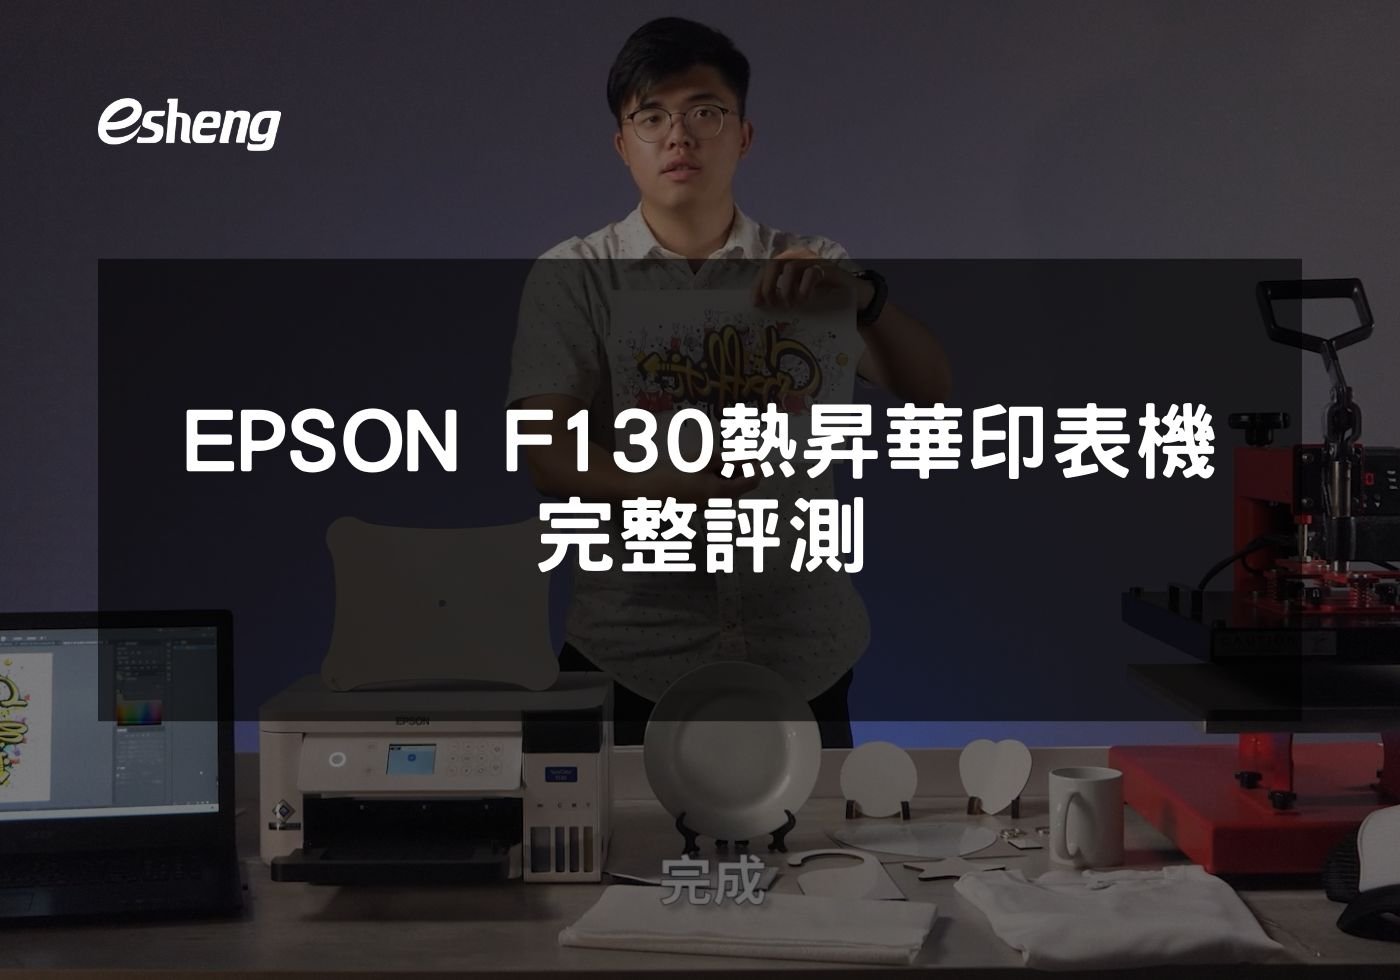 EPSON F130熱昇華印表機完整評測